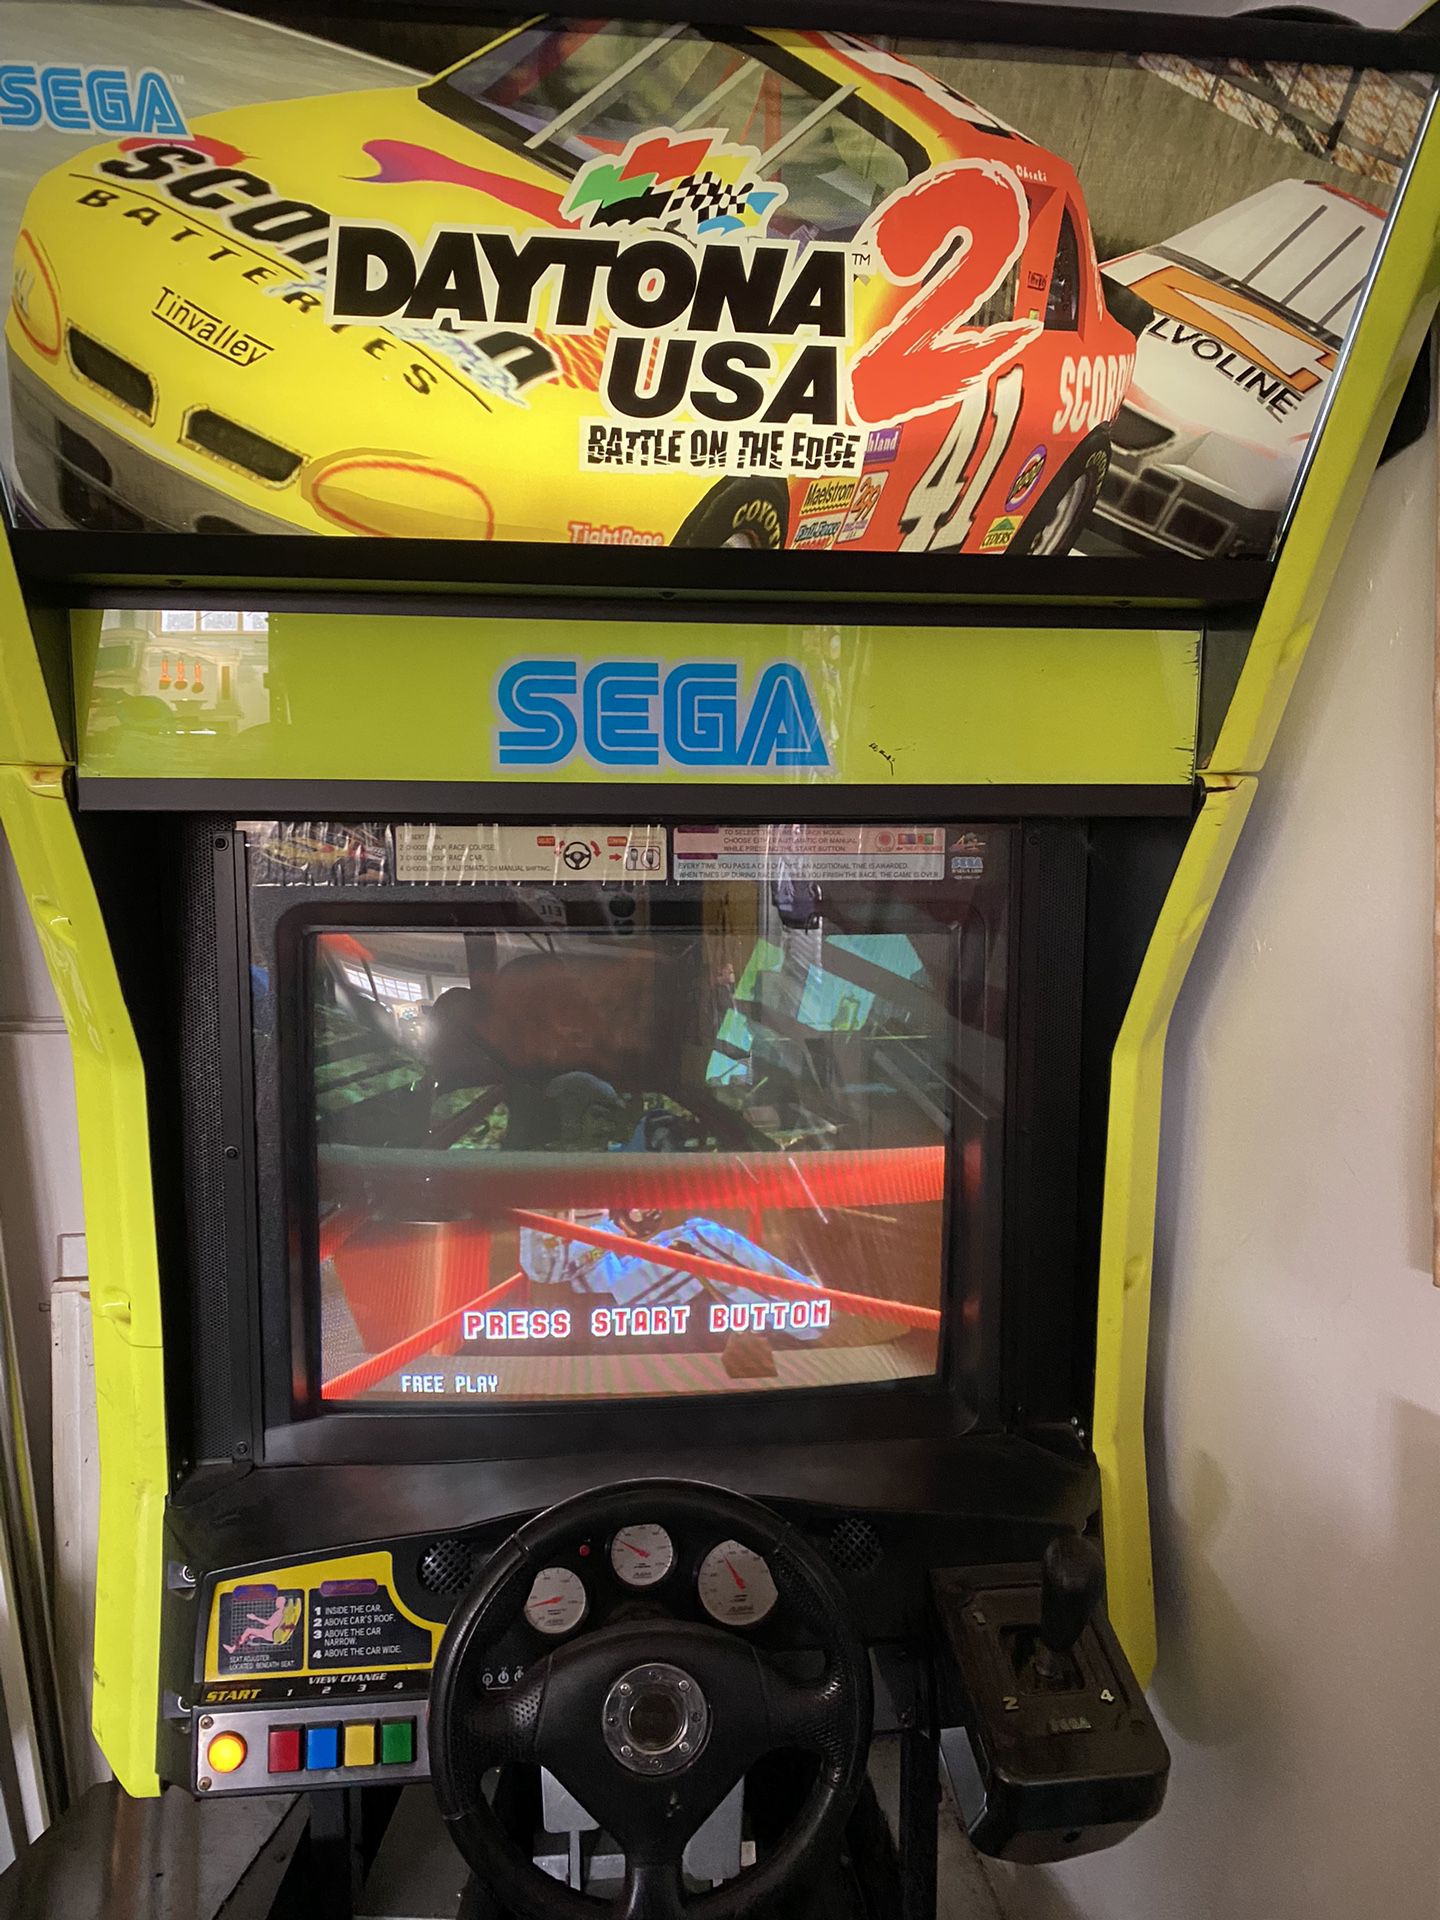 Sega - Daytona USA 2